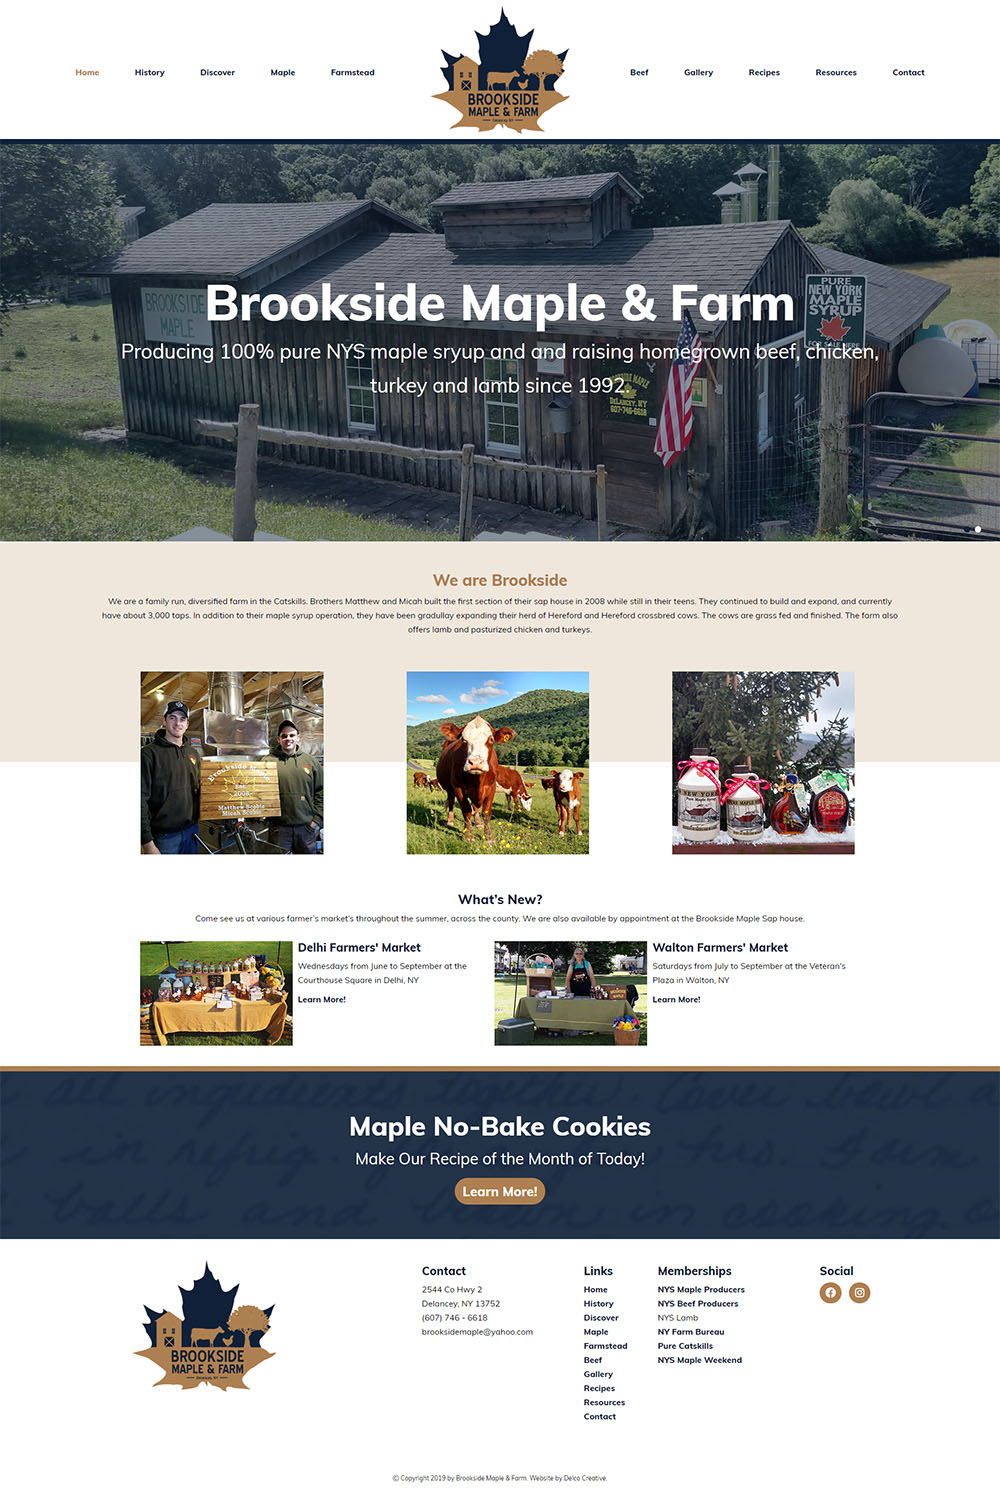 Brookside Maple & Farm website